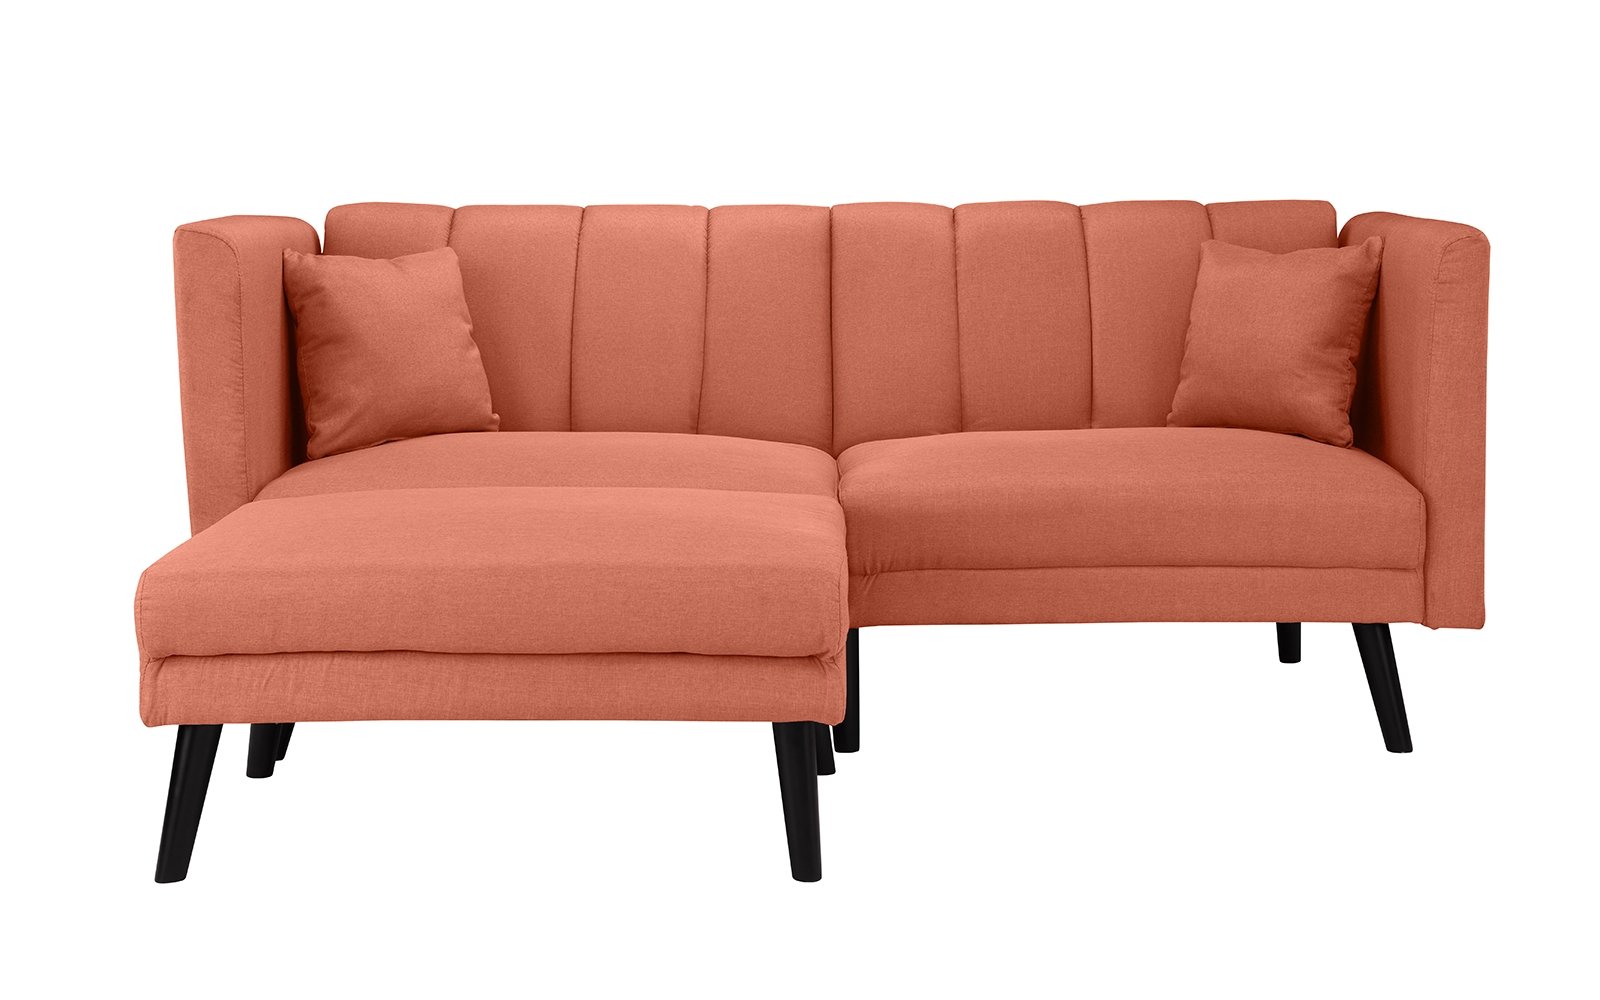 modern futon sofa bed